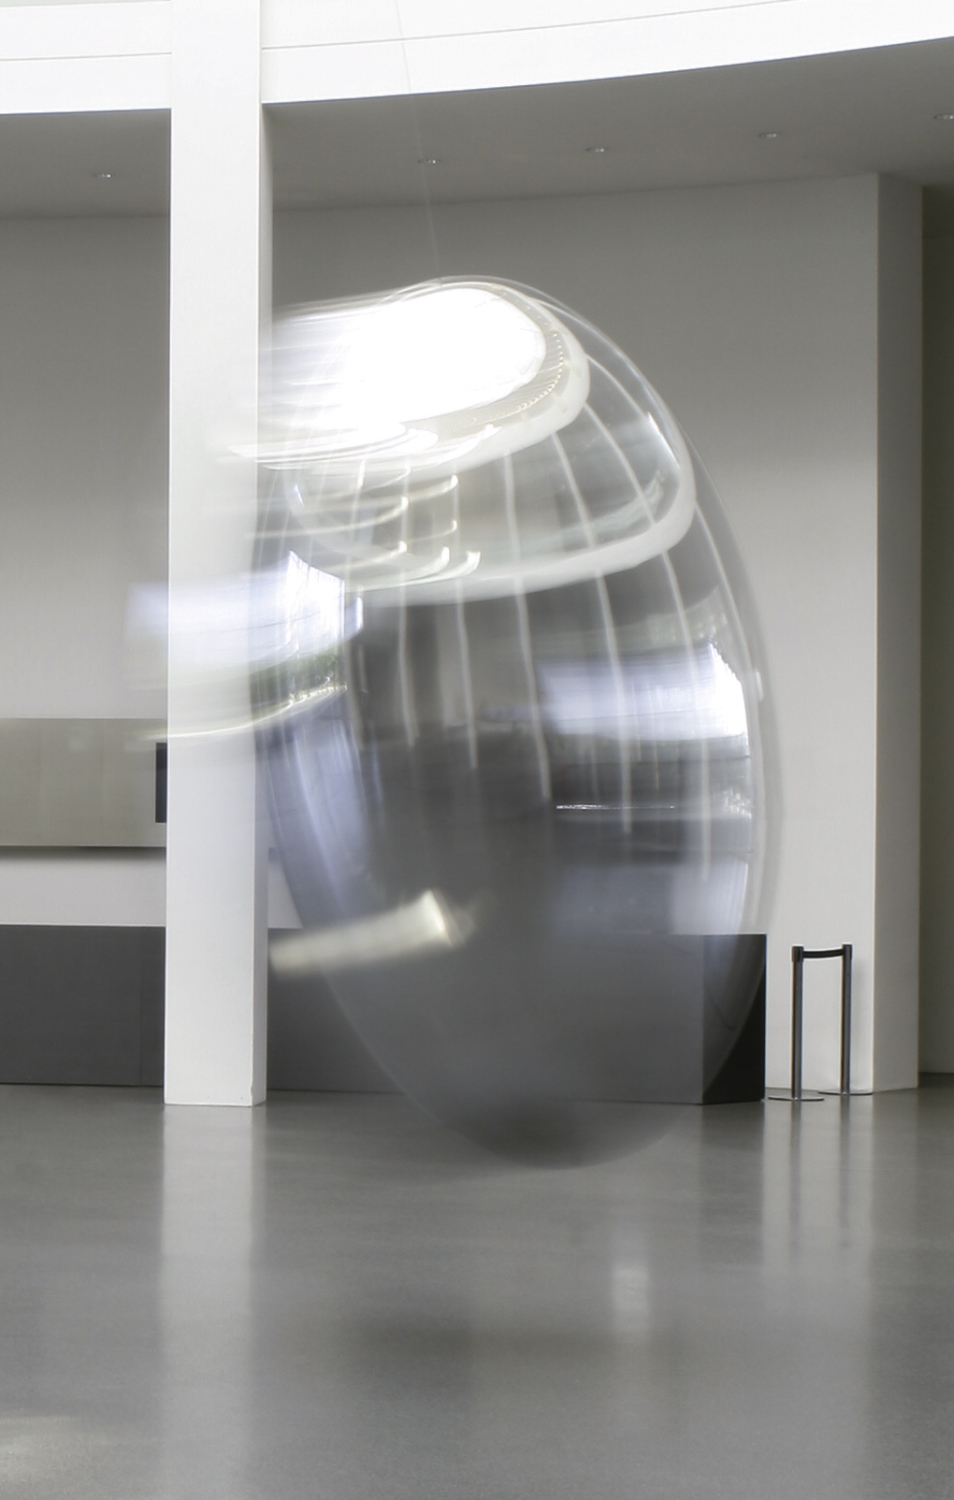 The monumental Pendulum made of highly polished aluminum reflects the surrounding architecture